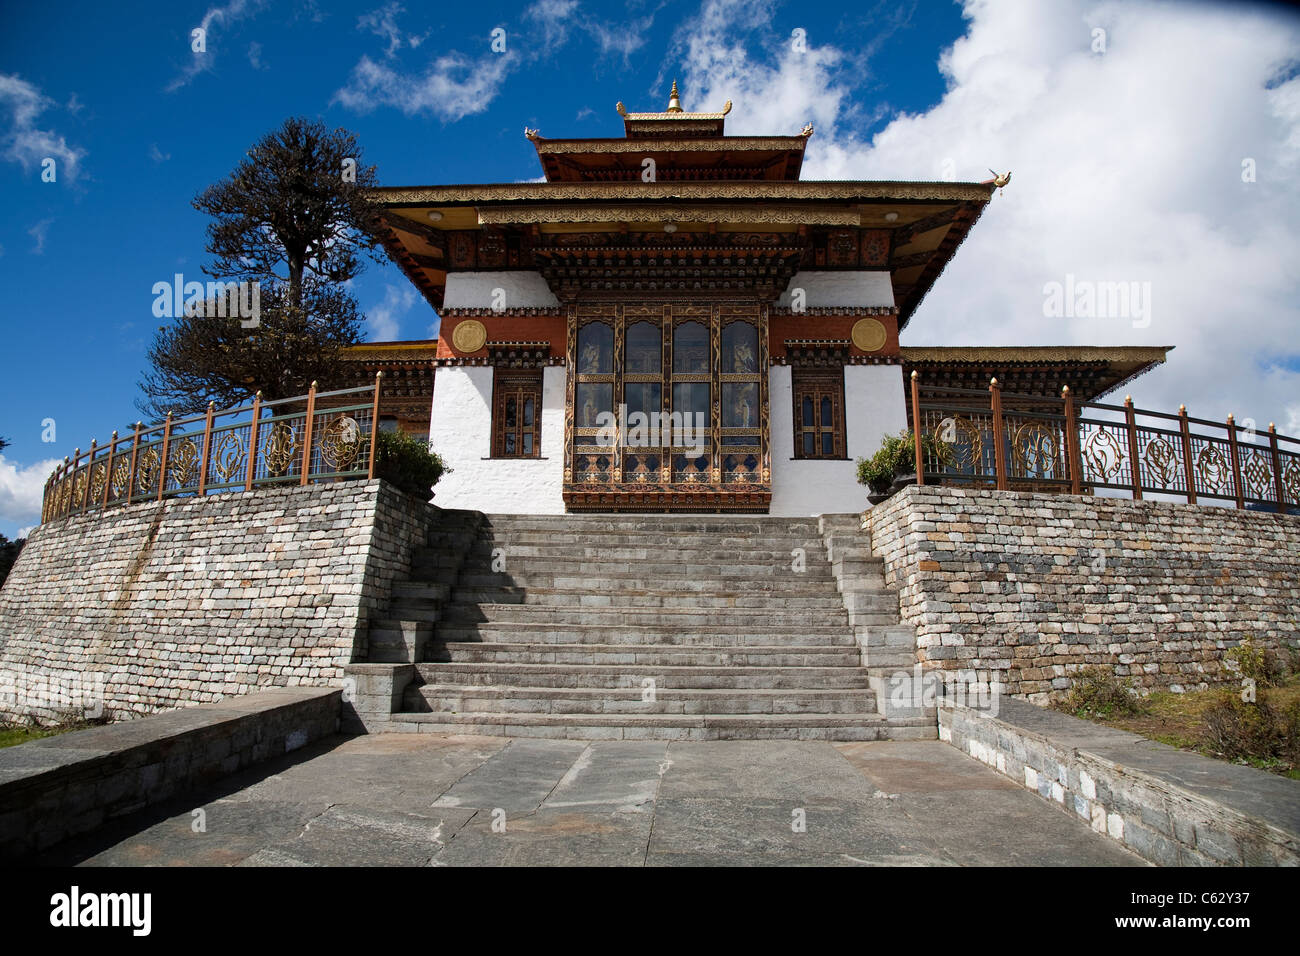 Temple / monastery at Dochu La pass, Bhutan, Asia Stock Photo